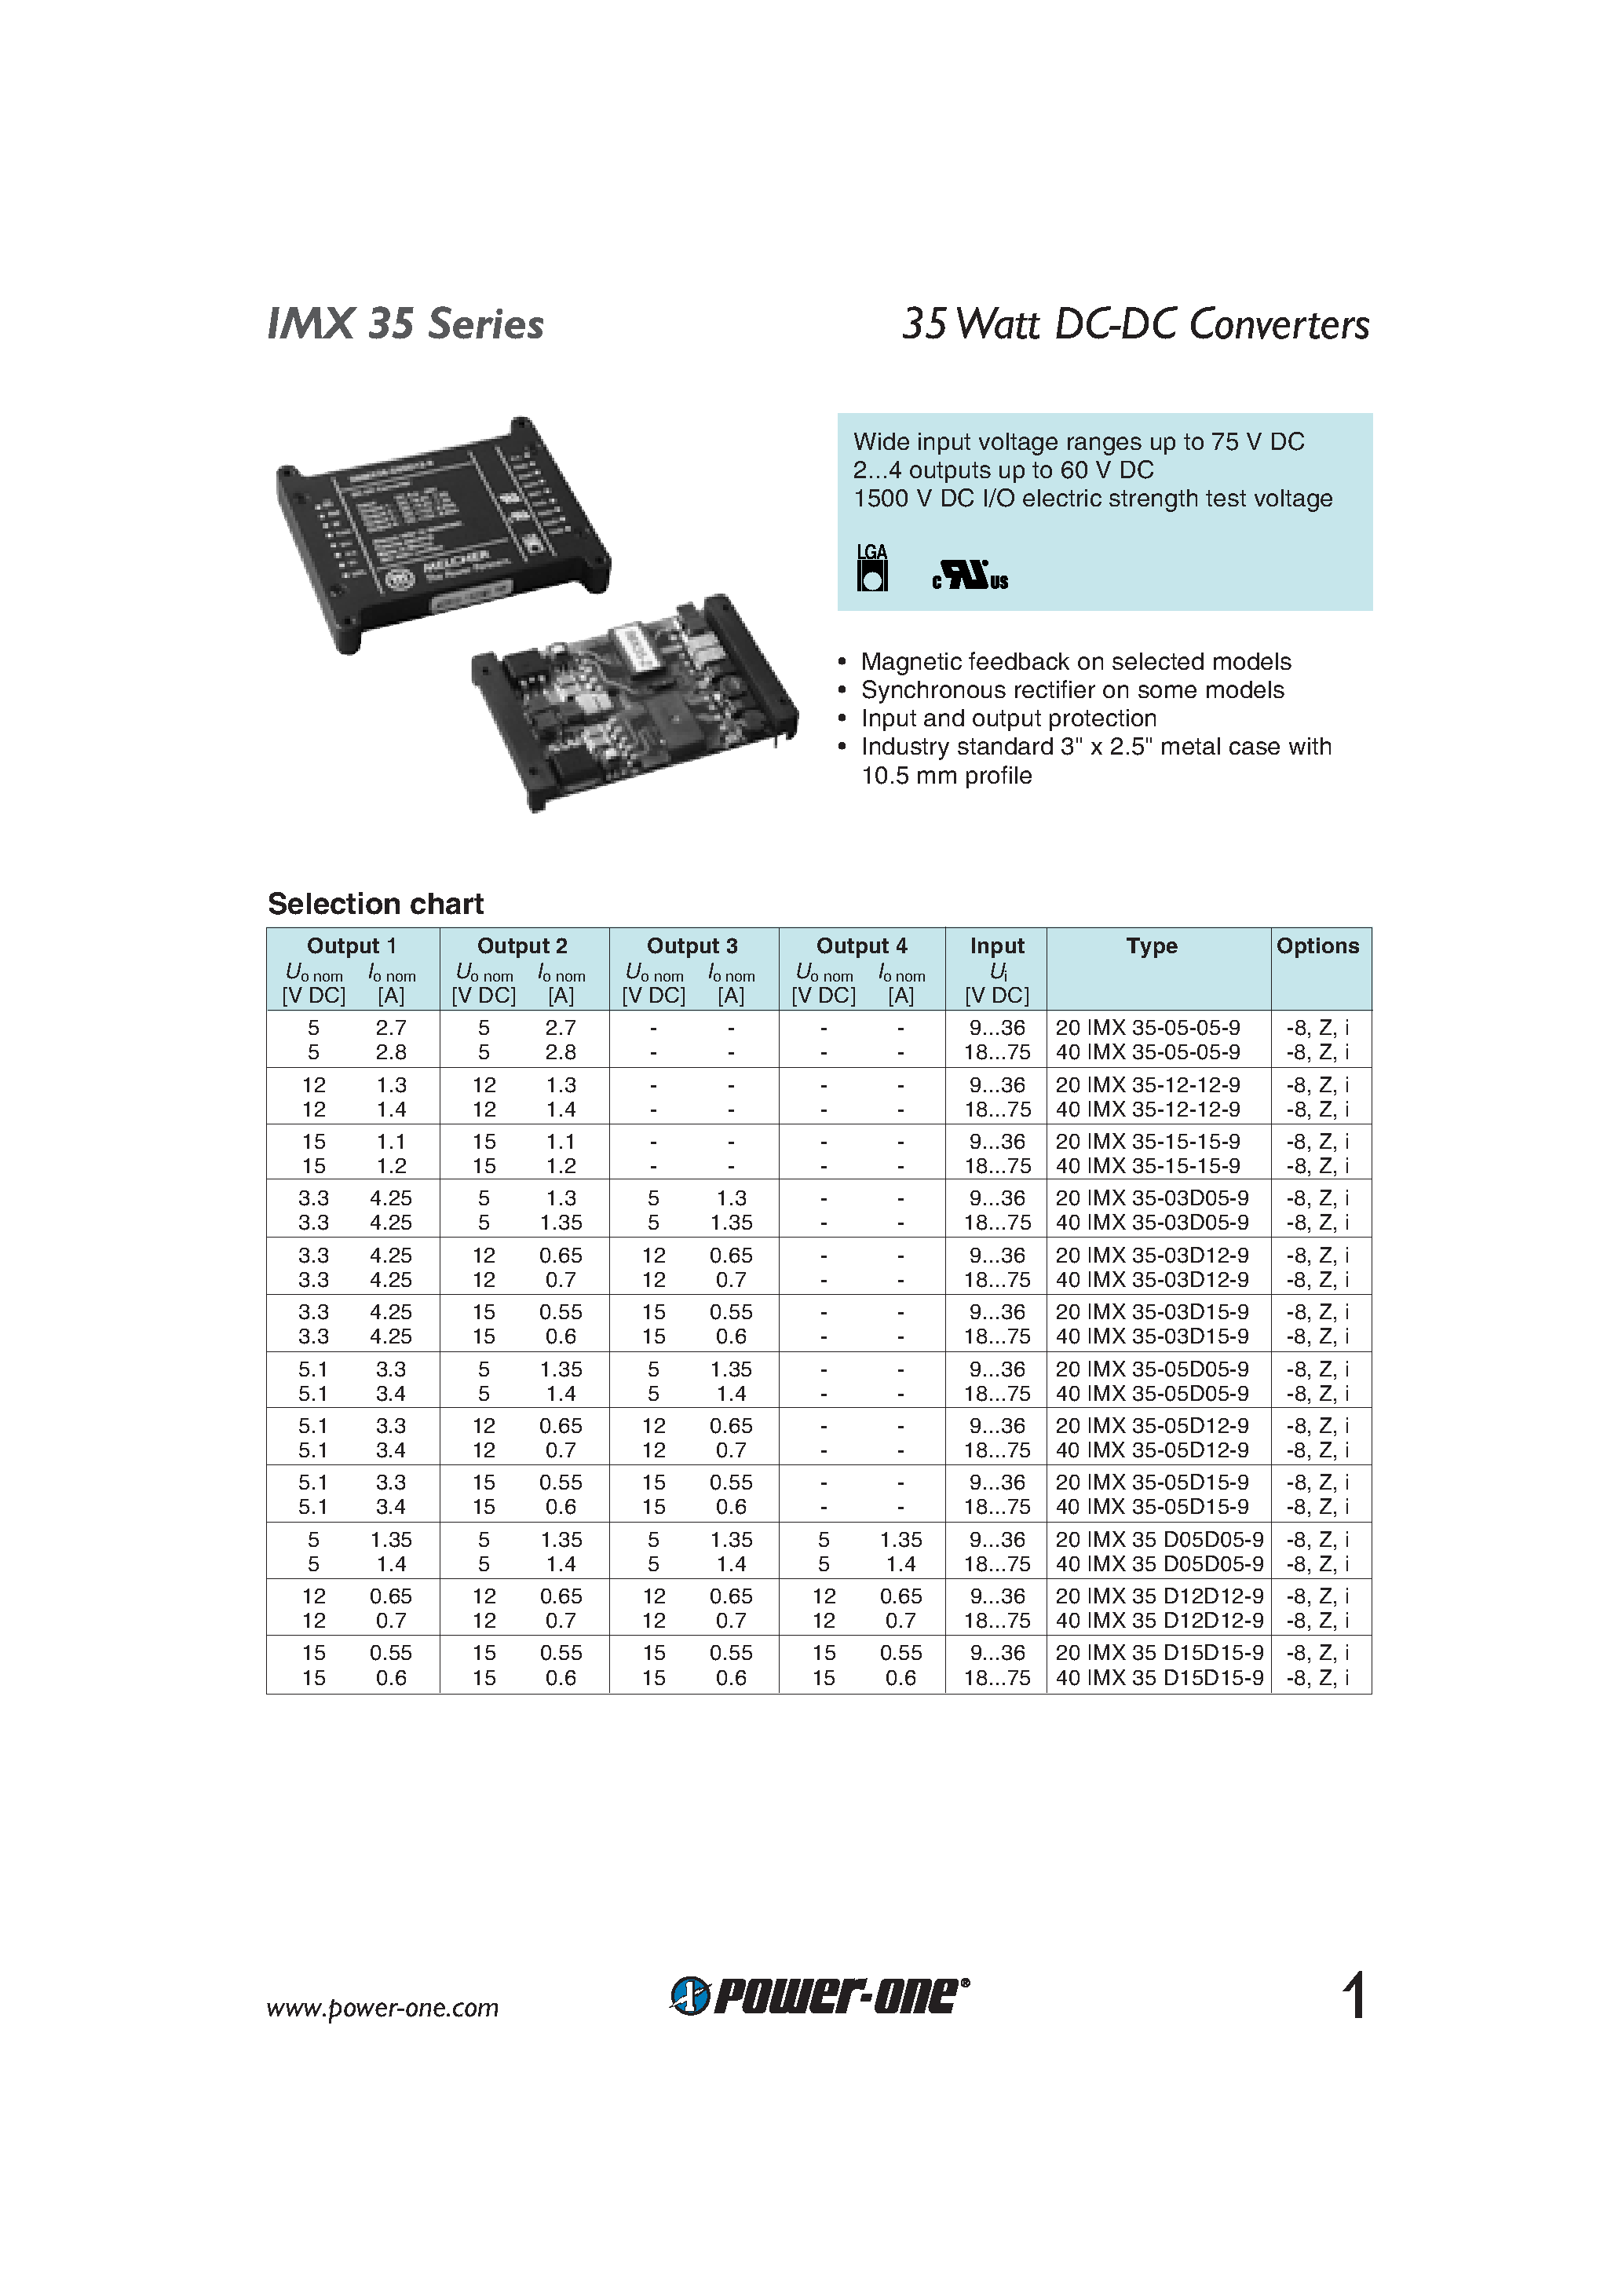 Datasheet 40IMX35-12-12-9 - 35 Watt DC-DC Converters page 1